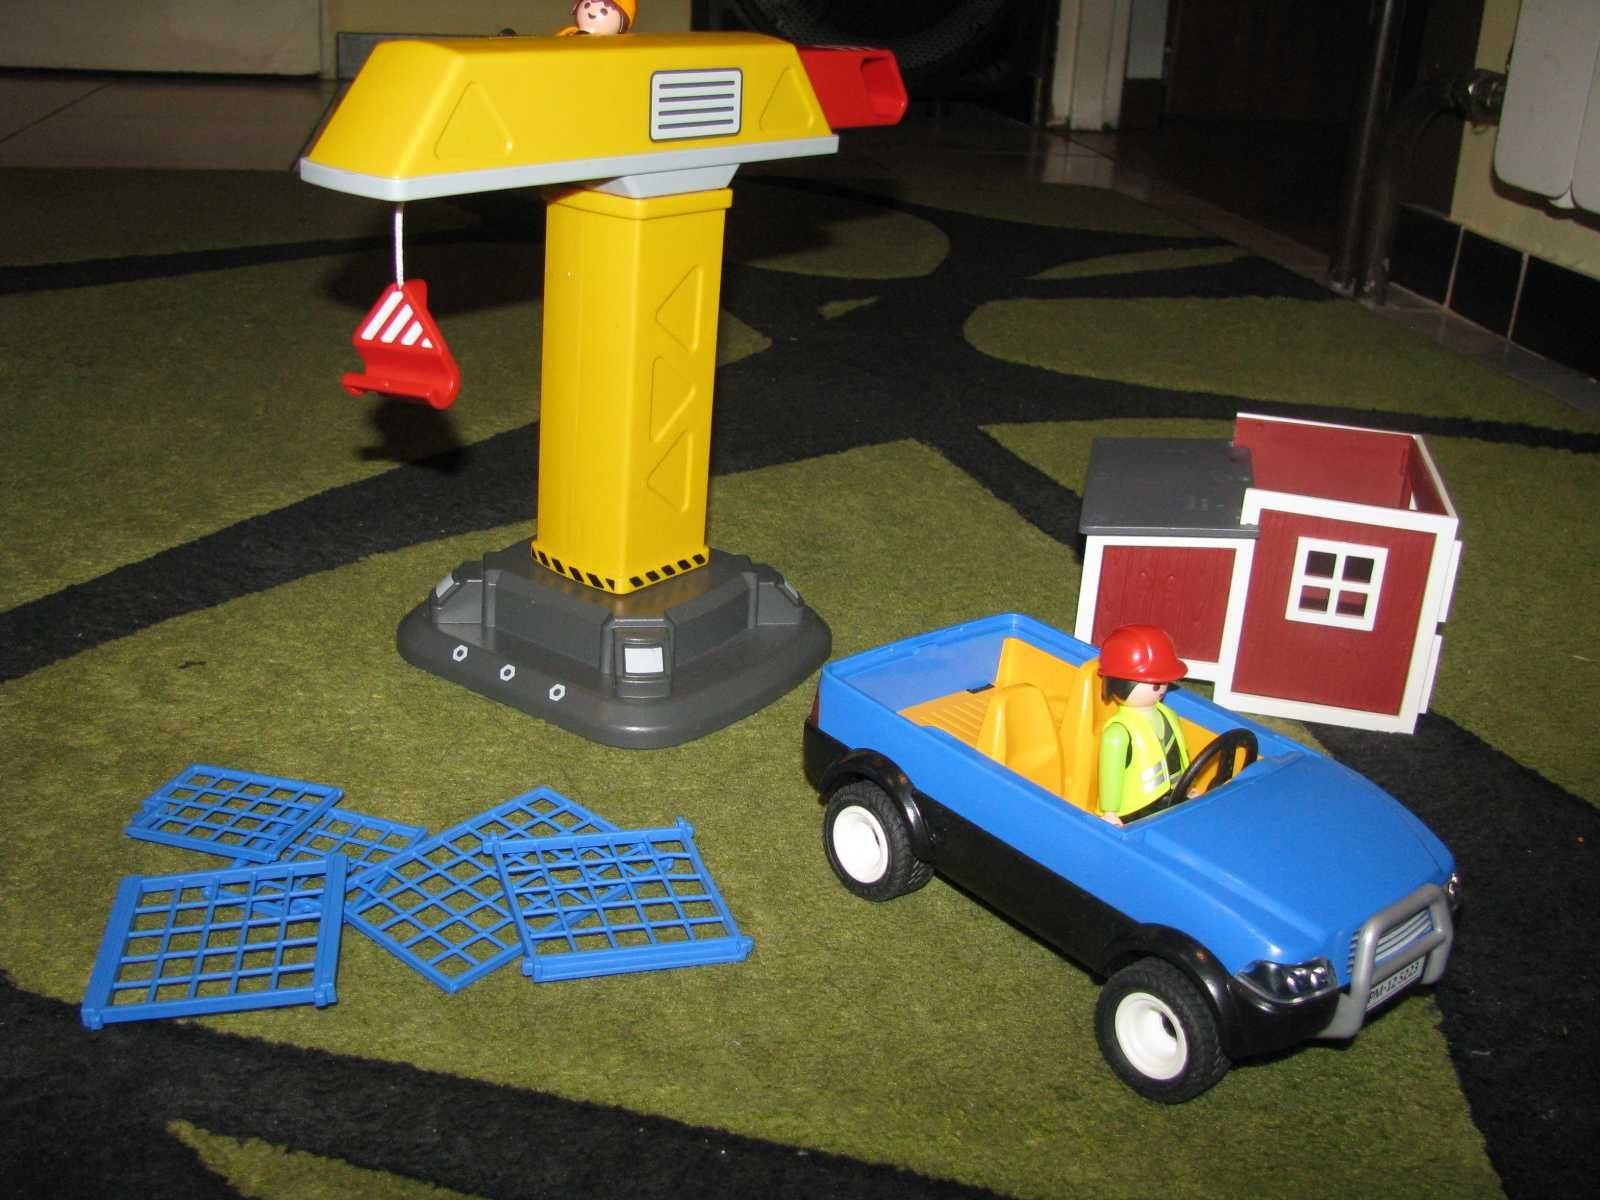 Zabawki playmobil dźwig budowlany, autko i inne